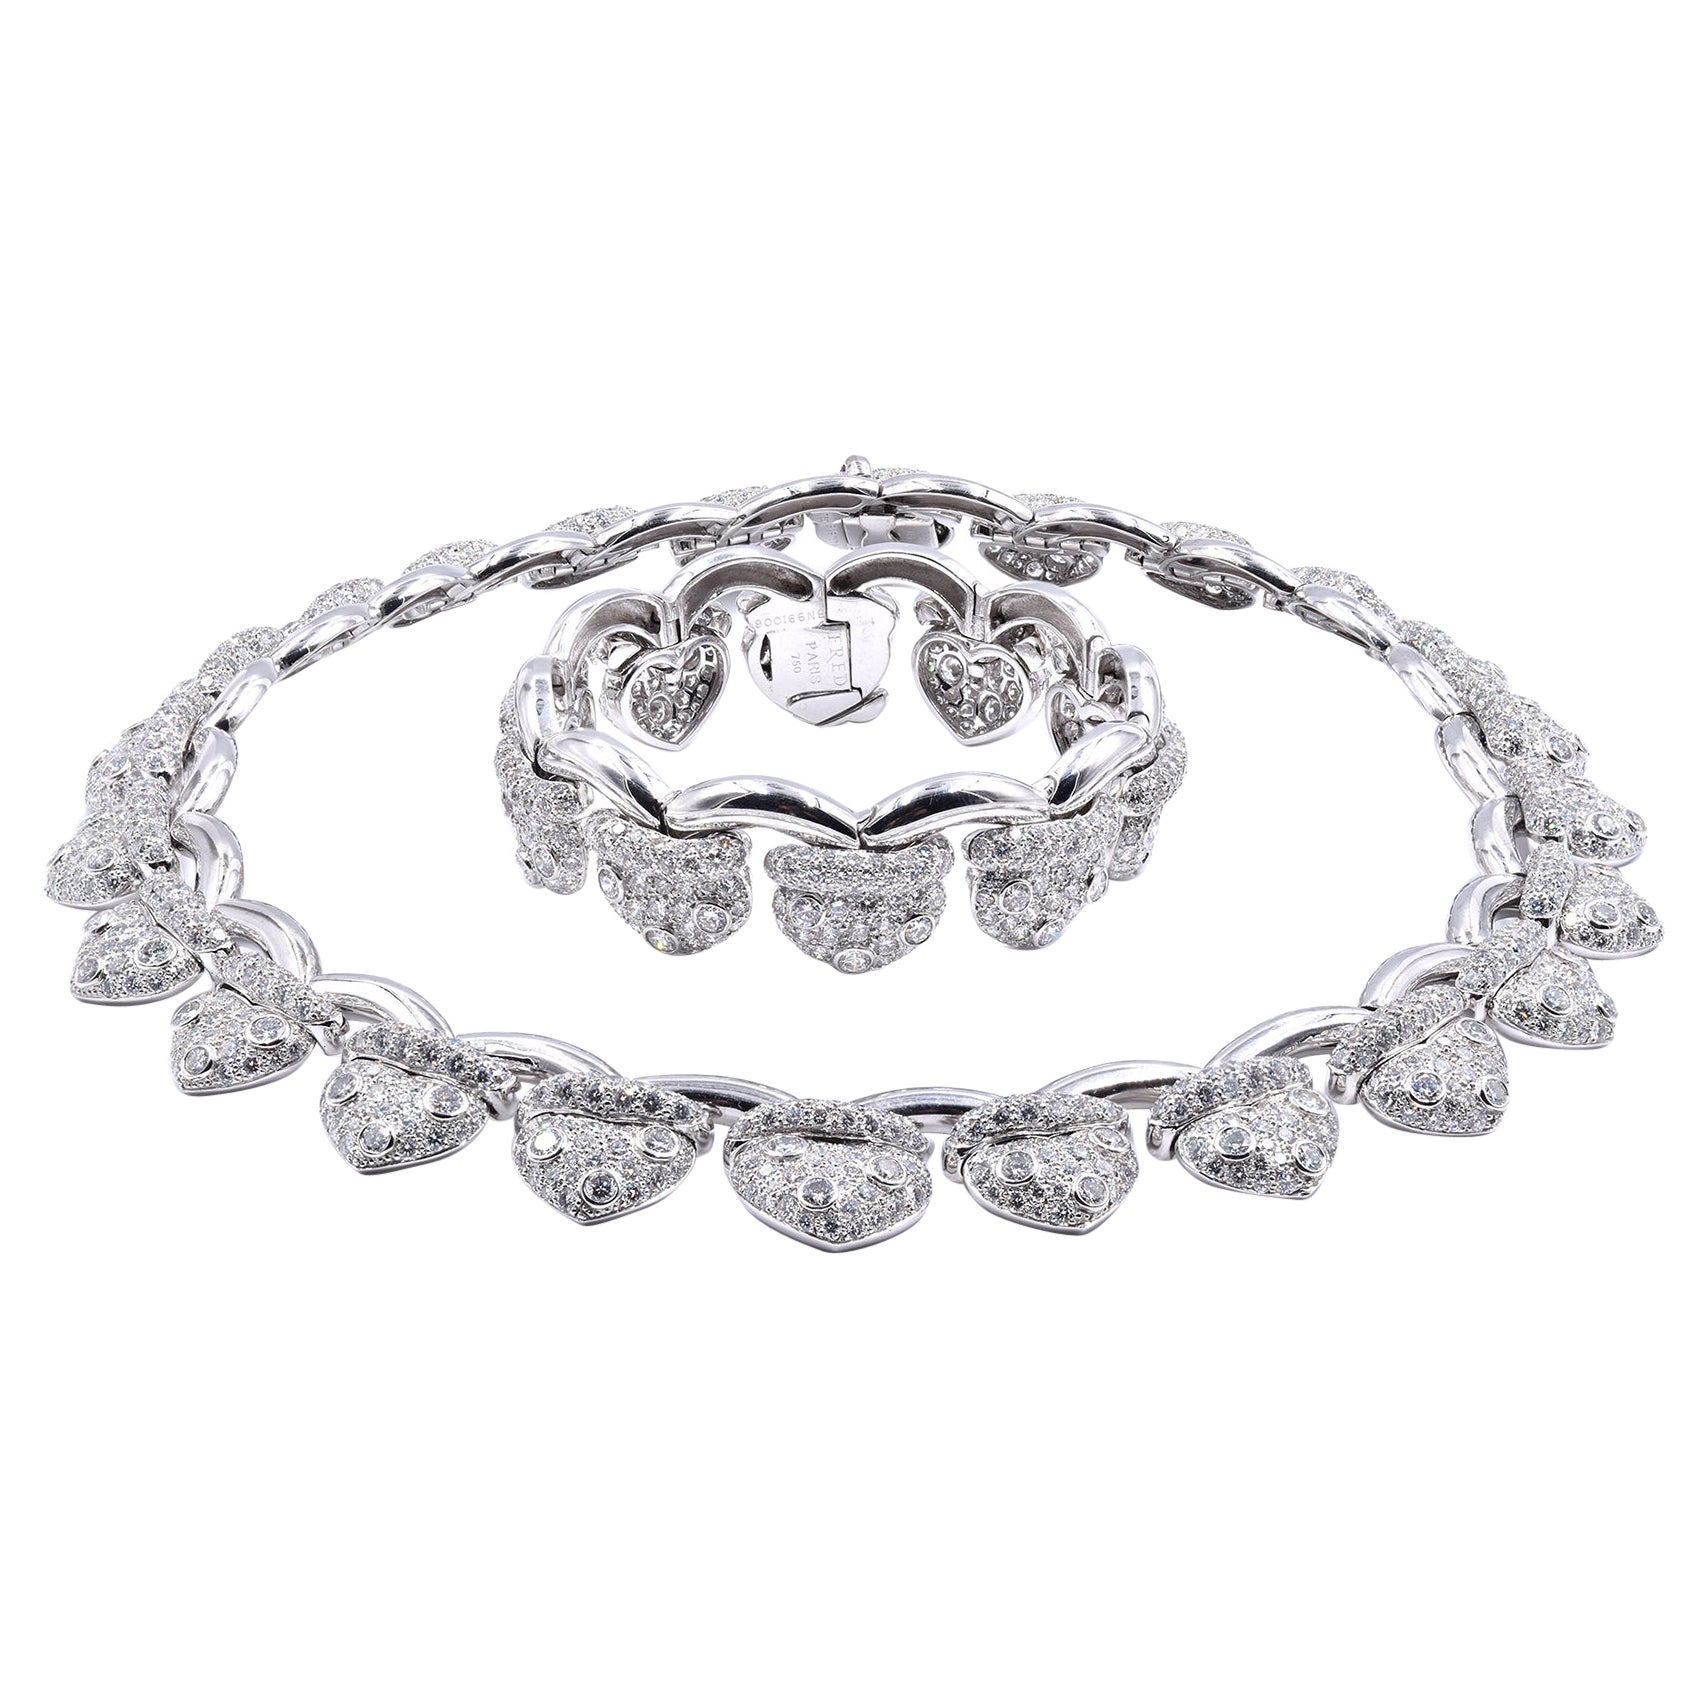 Fred 18 Karat White Gold Pave Diamond Heart Collar Necklace and Bracelet Set